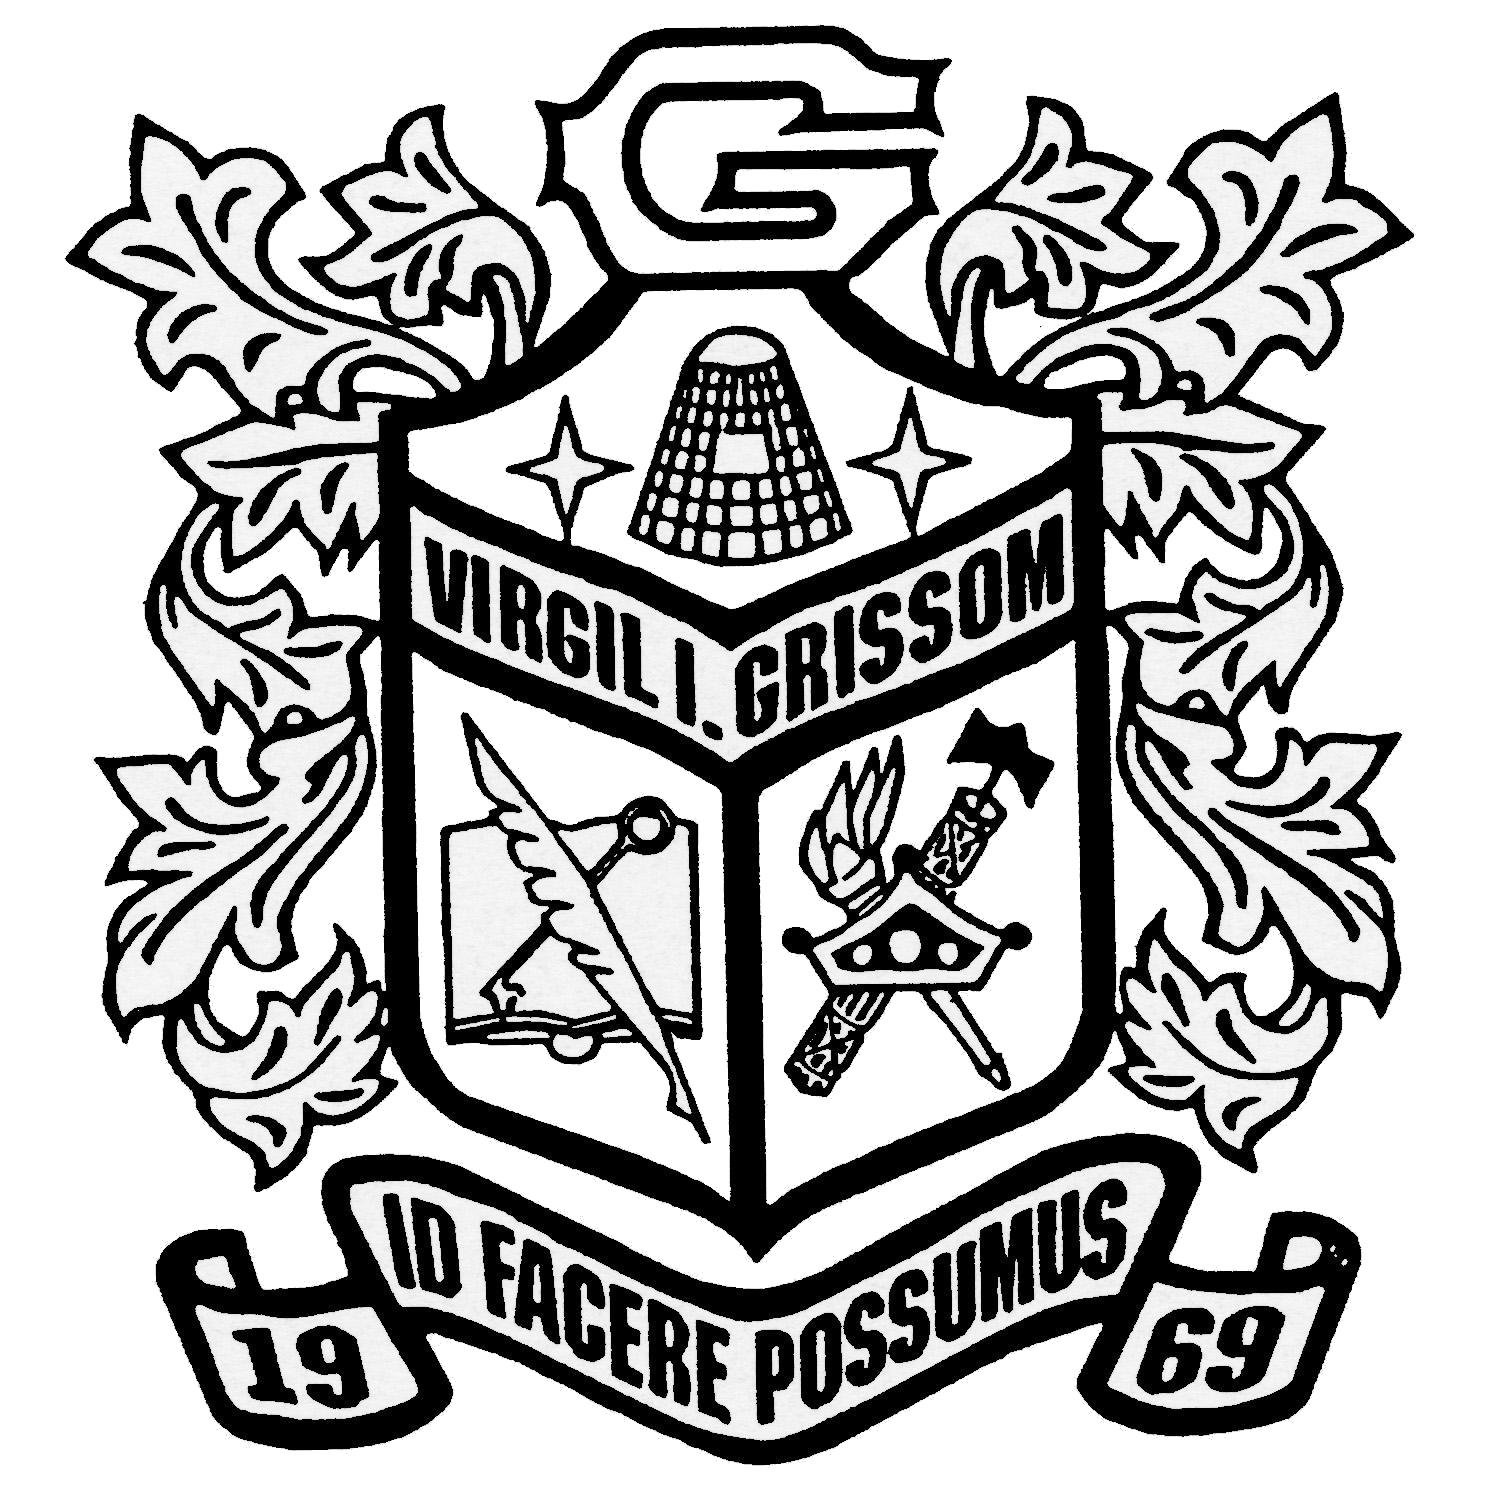 Virgil I. Grissom High School PTSA
P. O. Box 14362
Huntsville, AL  35815
GrissomPTSA@gmail.com